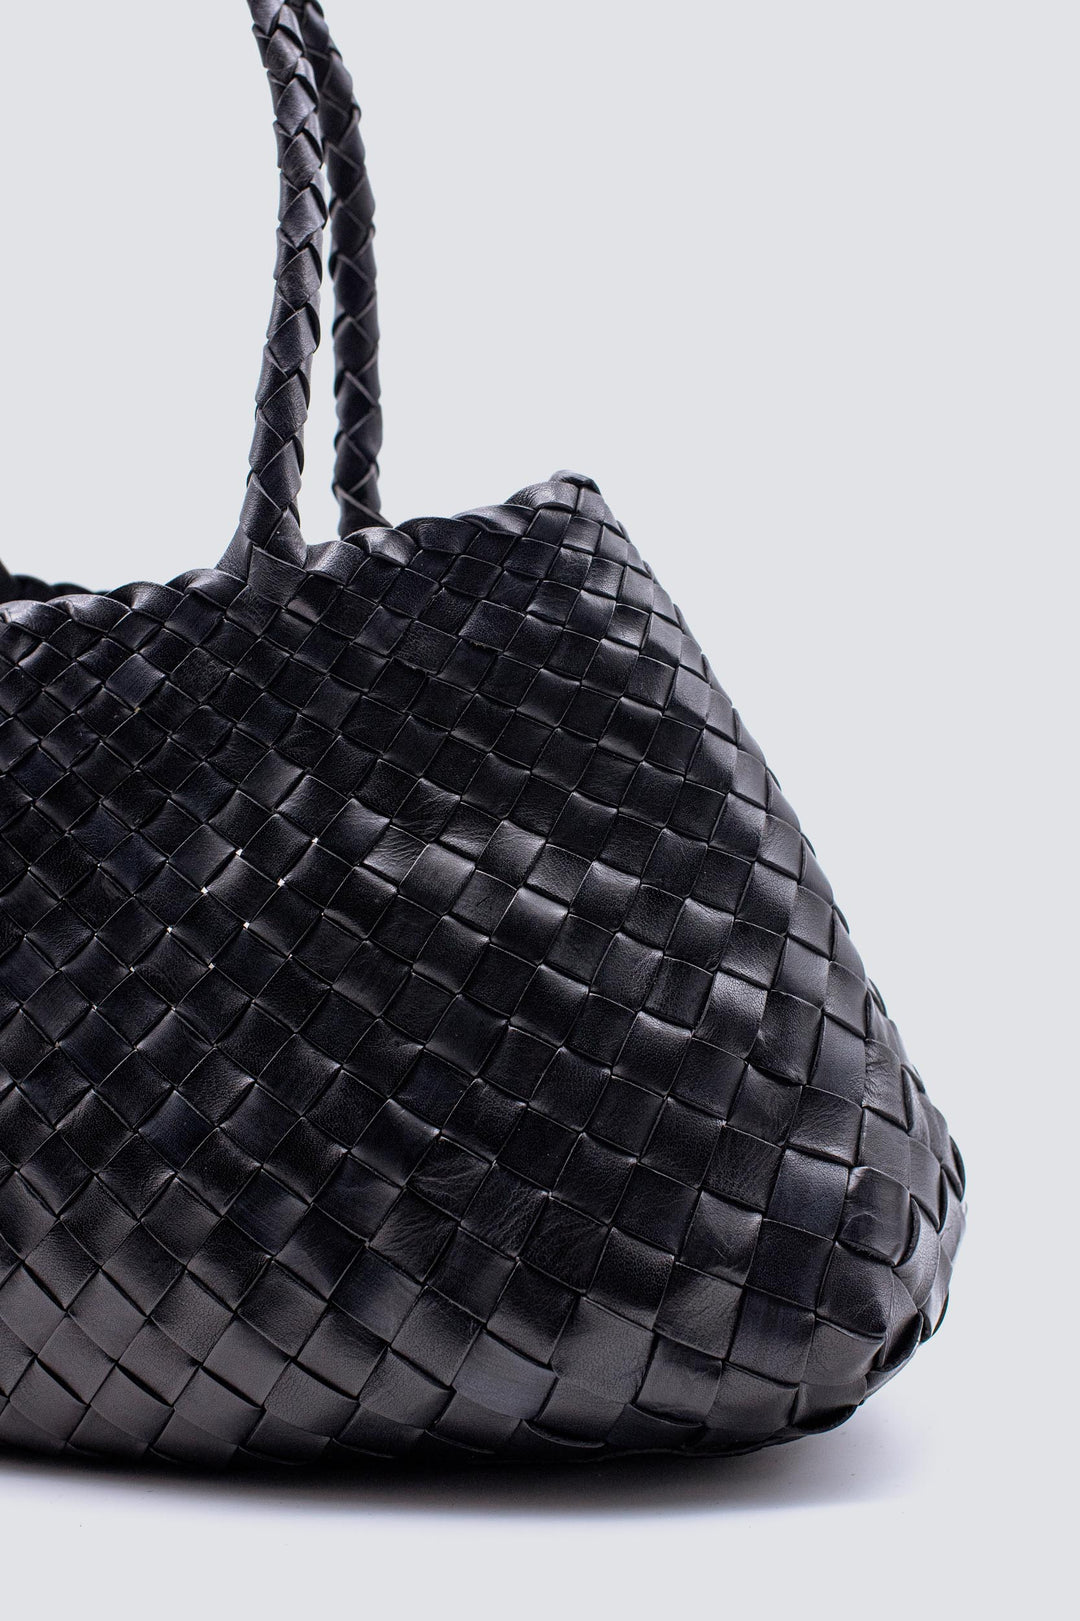 Dragon Diffusion woven leather bag handmade - Santa Croce Big Black